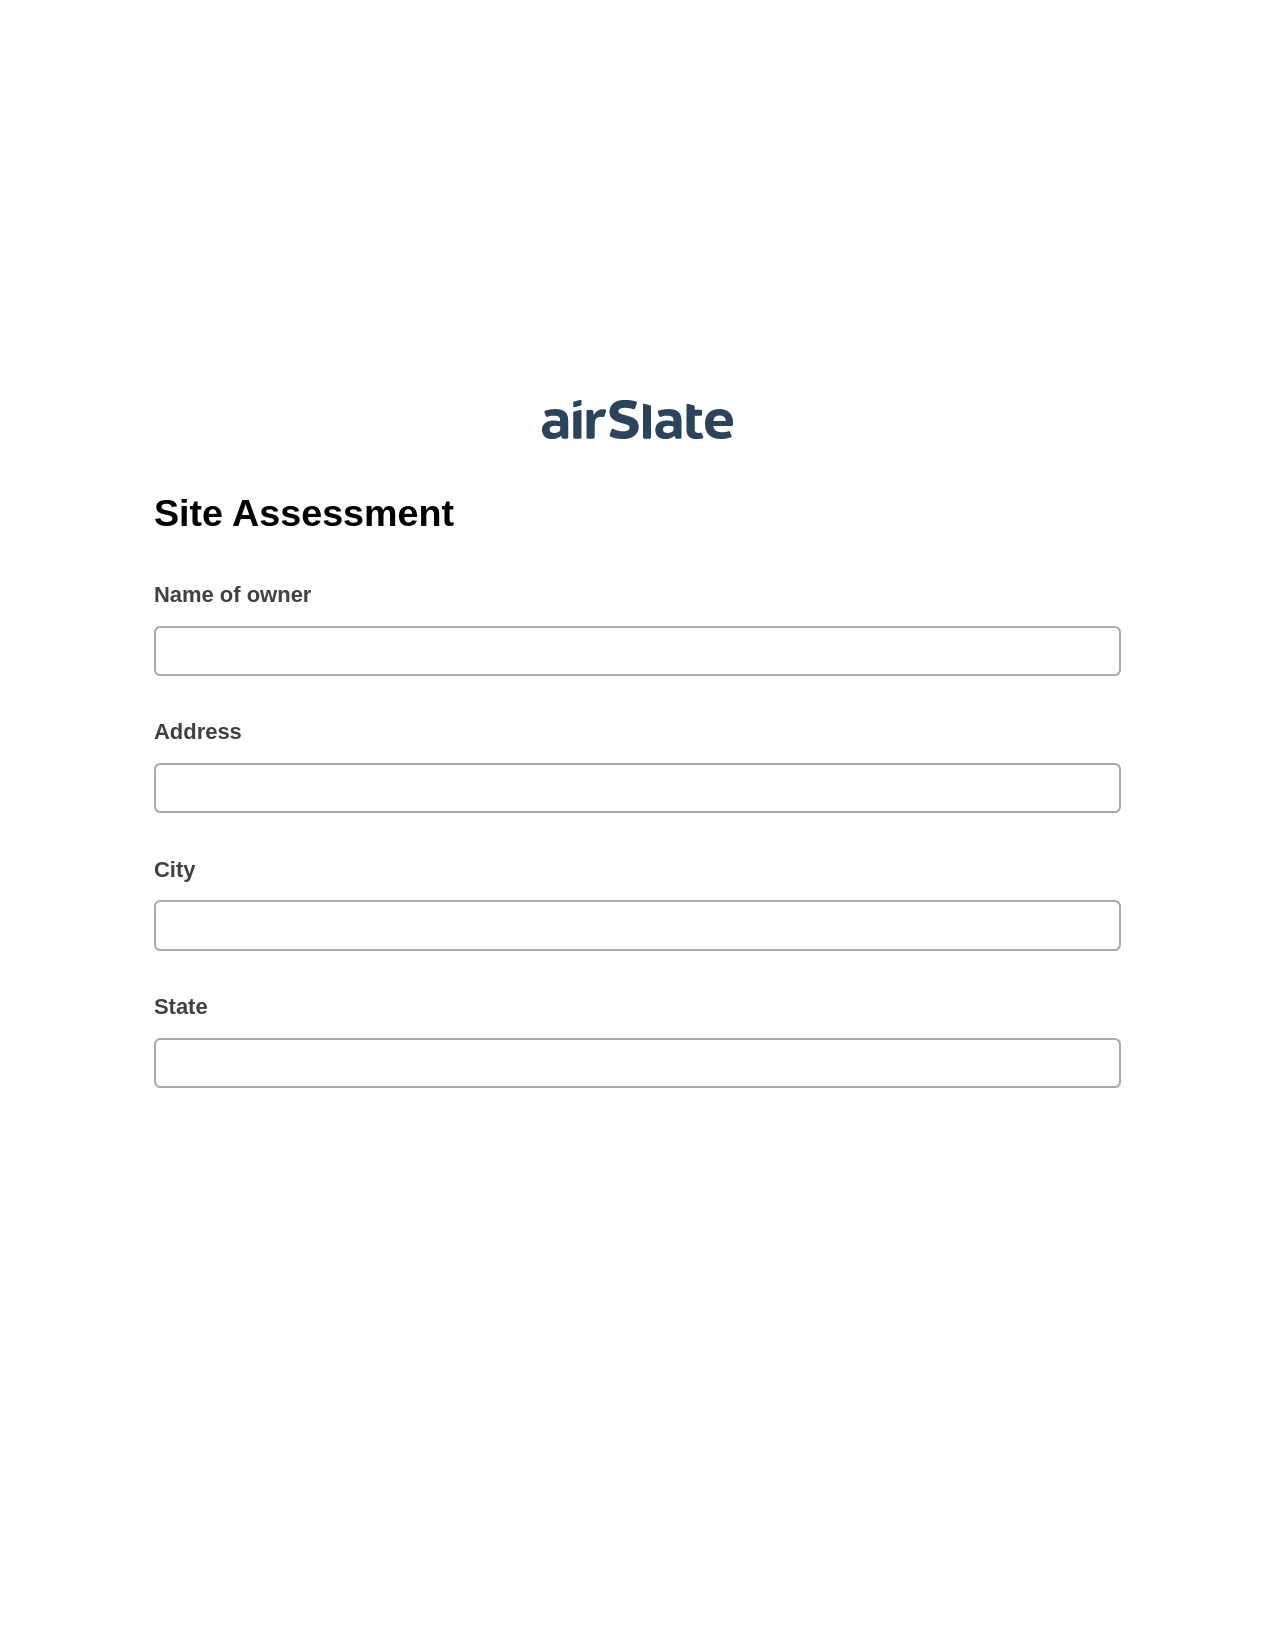 Site Assessment Pre-fill Slate from MS Dynamics 365 Records Bot, Webhook Bot, Slack Notification Postfinish Bot